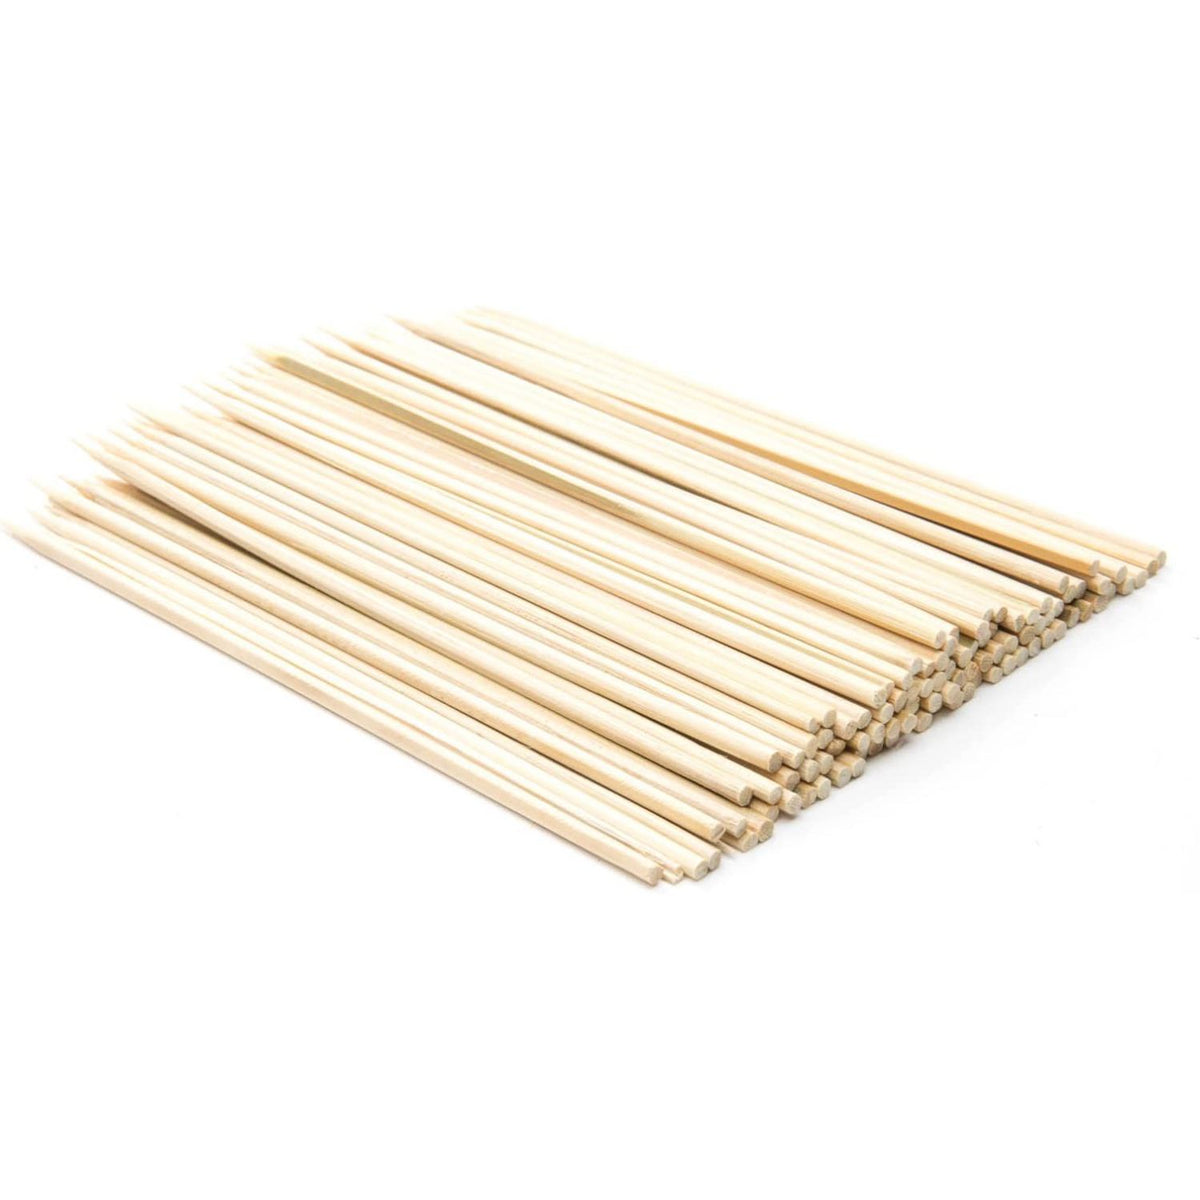 6-Inch Bamboo Wood Skewers - Pack of 100